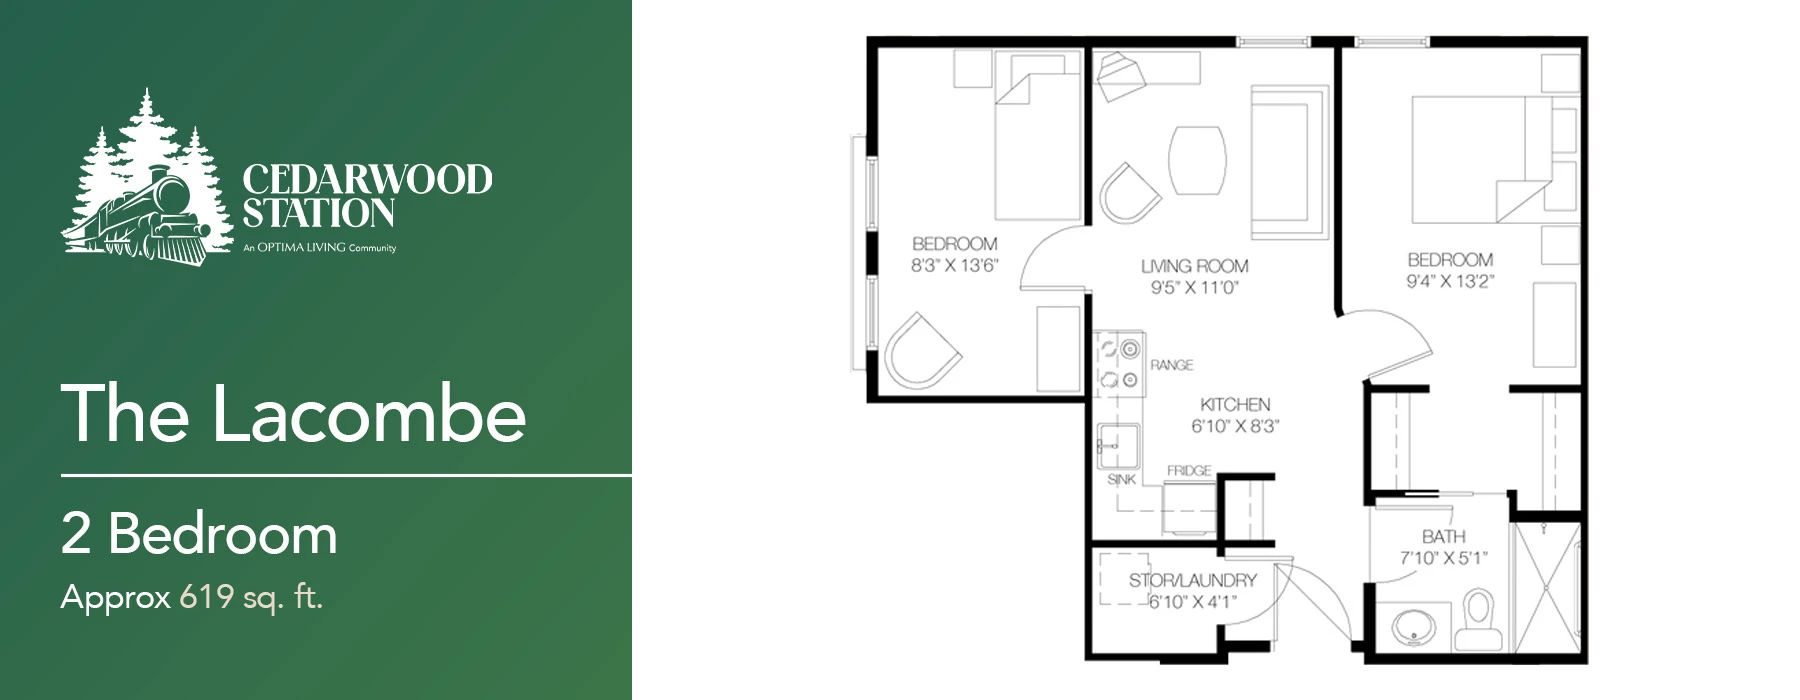 The Lacombe 2 bedroom floor plan